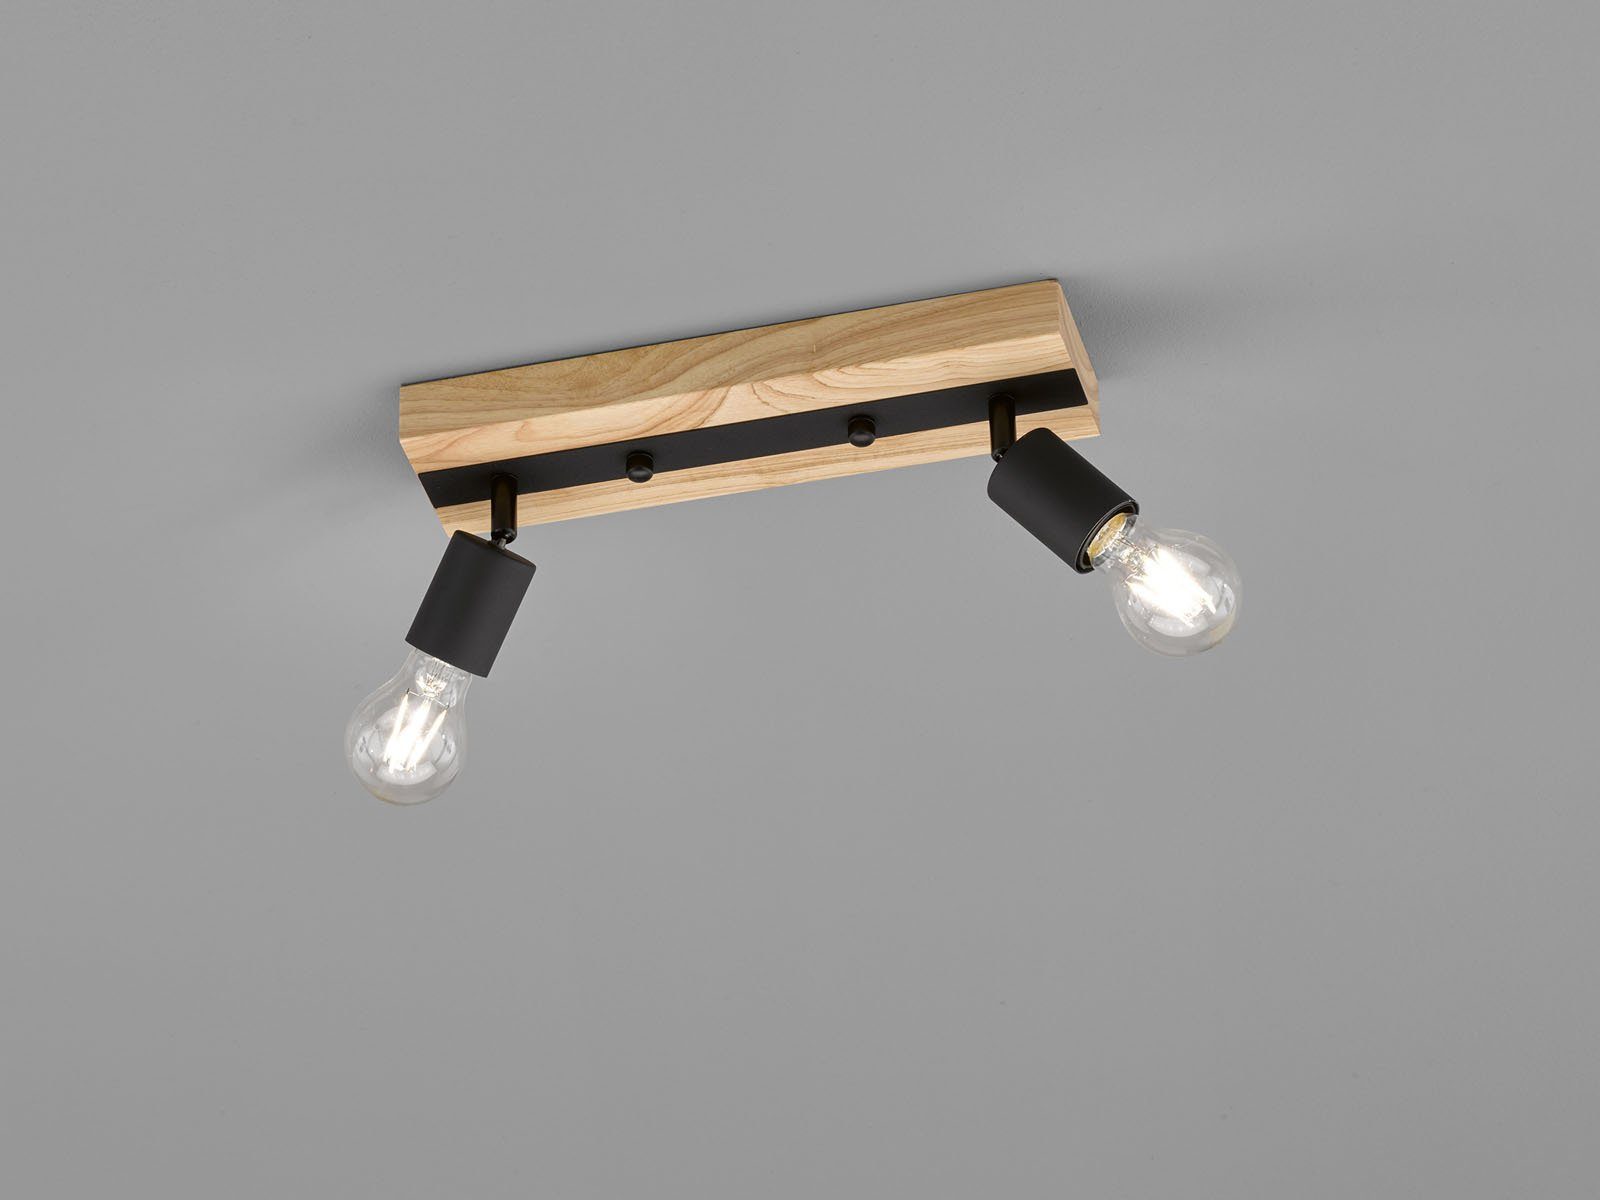 innen Holzbalken easy! LED B: Dimmfunktion, Warmweiß, 2-flammig 33cm Strahler Deckenstrahler, mit Holz-lampe FHL LED Deckenlampe wechselbar,